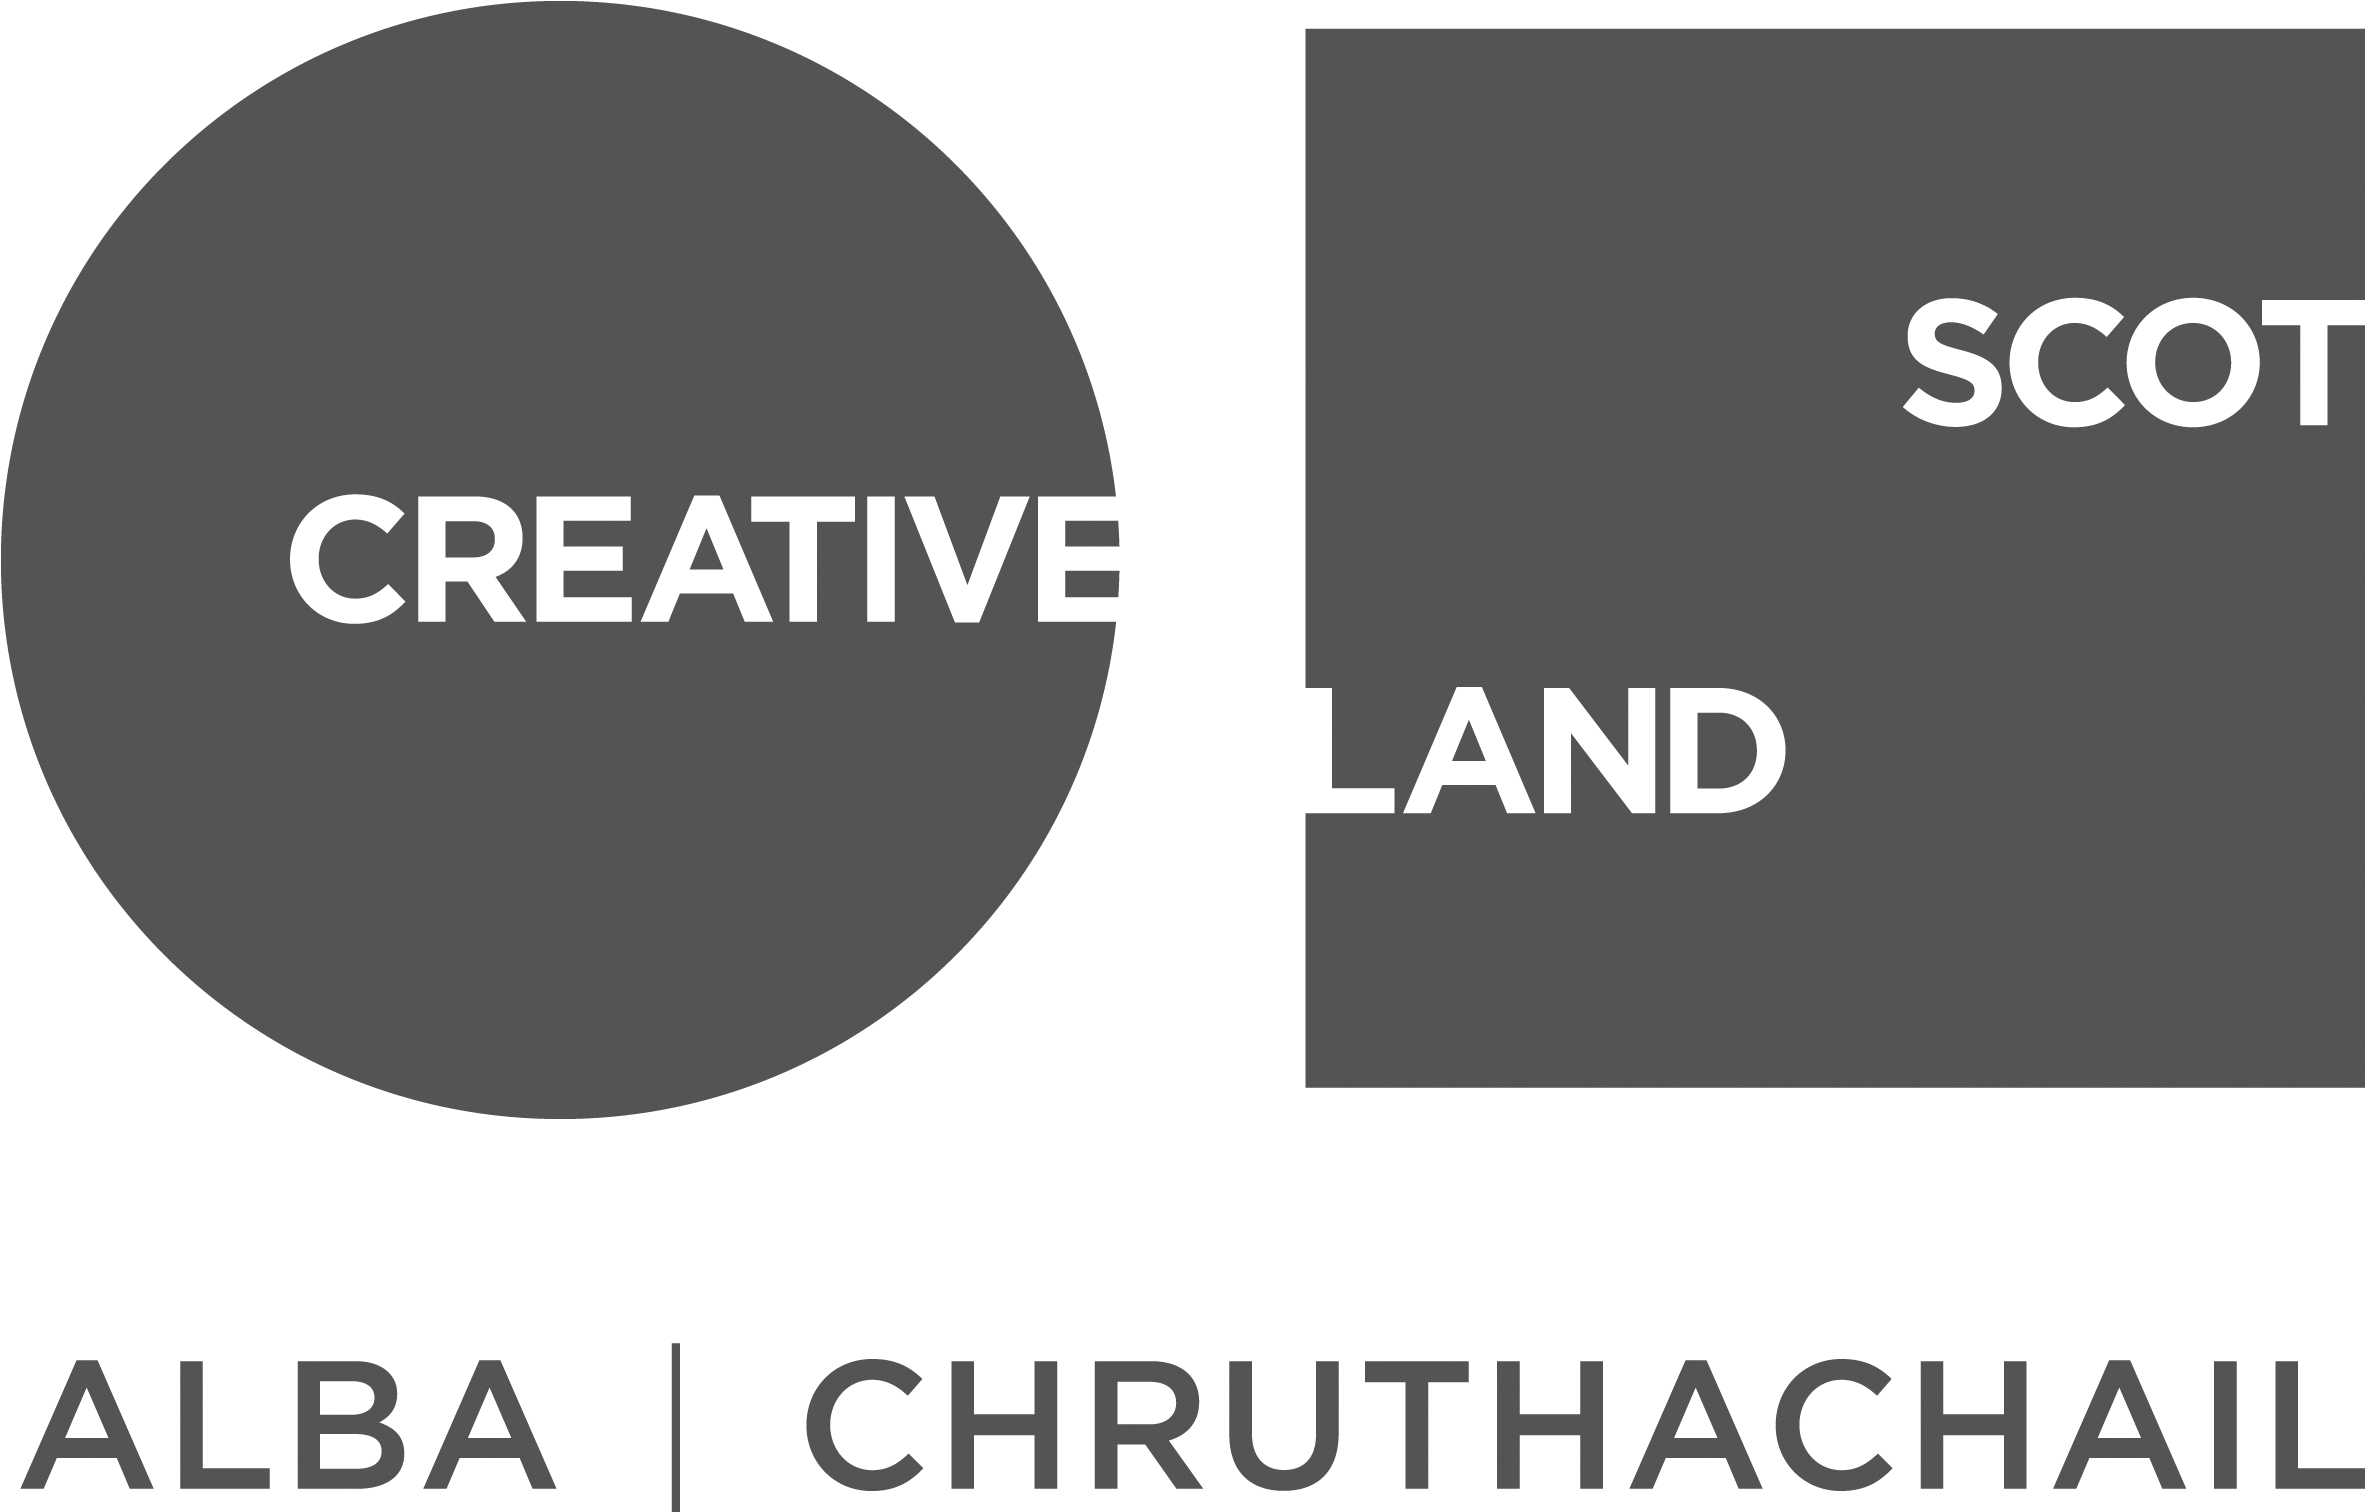 Edinburgh Festival City - Creative Scotland Logo Png (2481x1630), Png Download